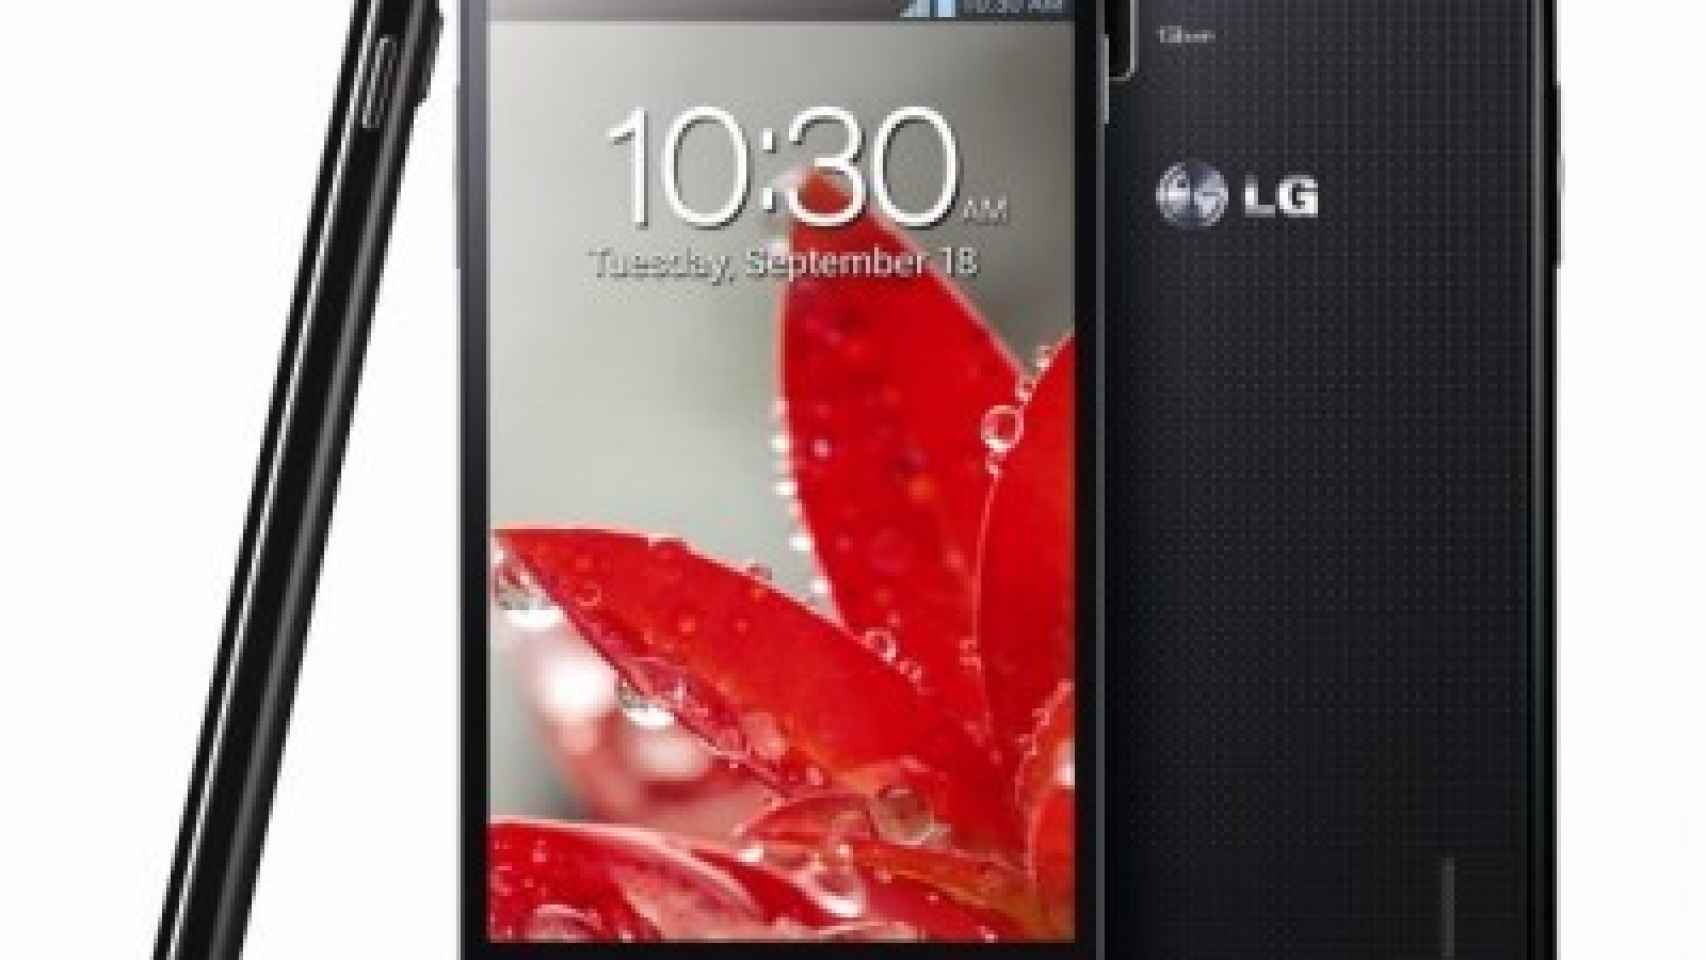 LG Optimus G: El primer dispositivo Android con 4G LTE que llegará a España